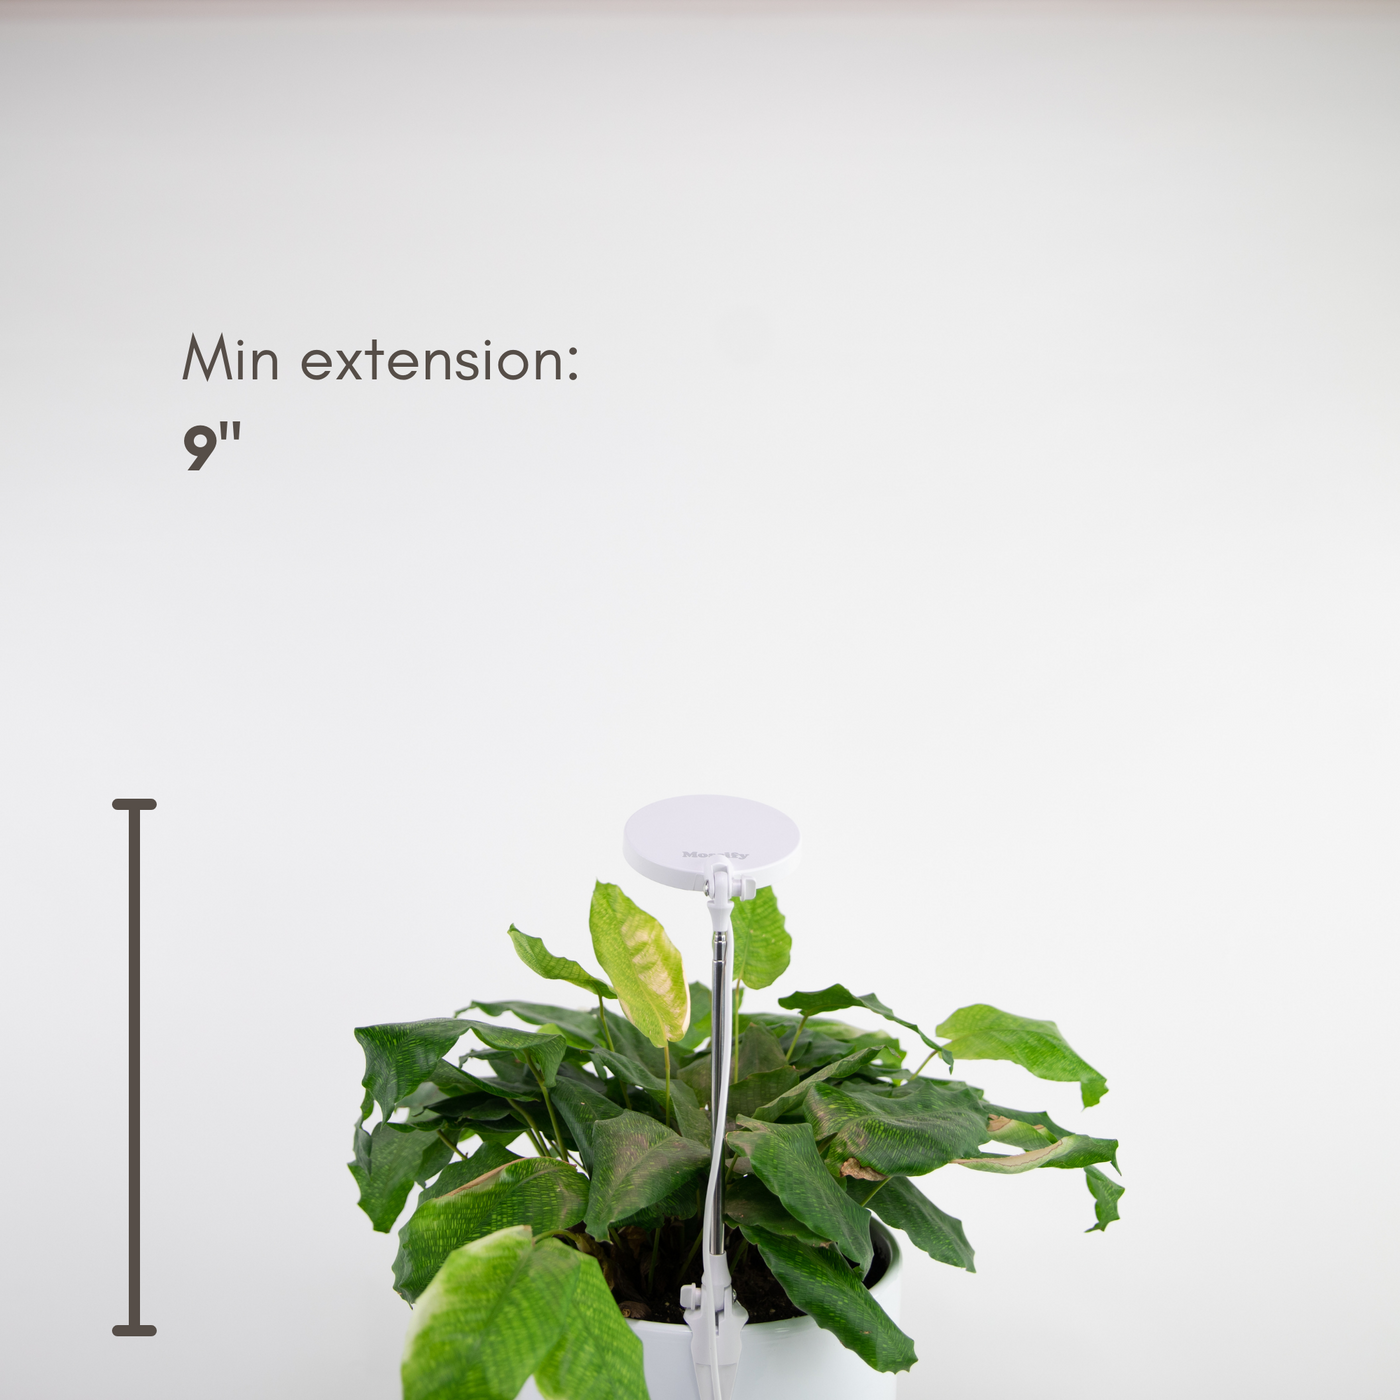 Mossify 28" Adjustable LED Plant Light, White